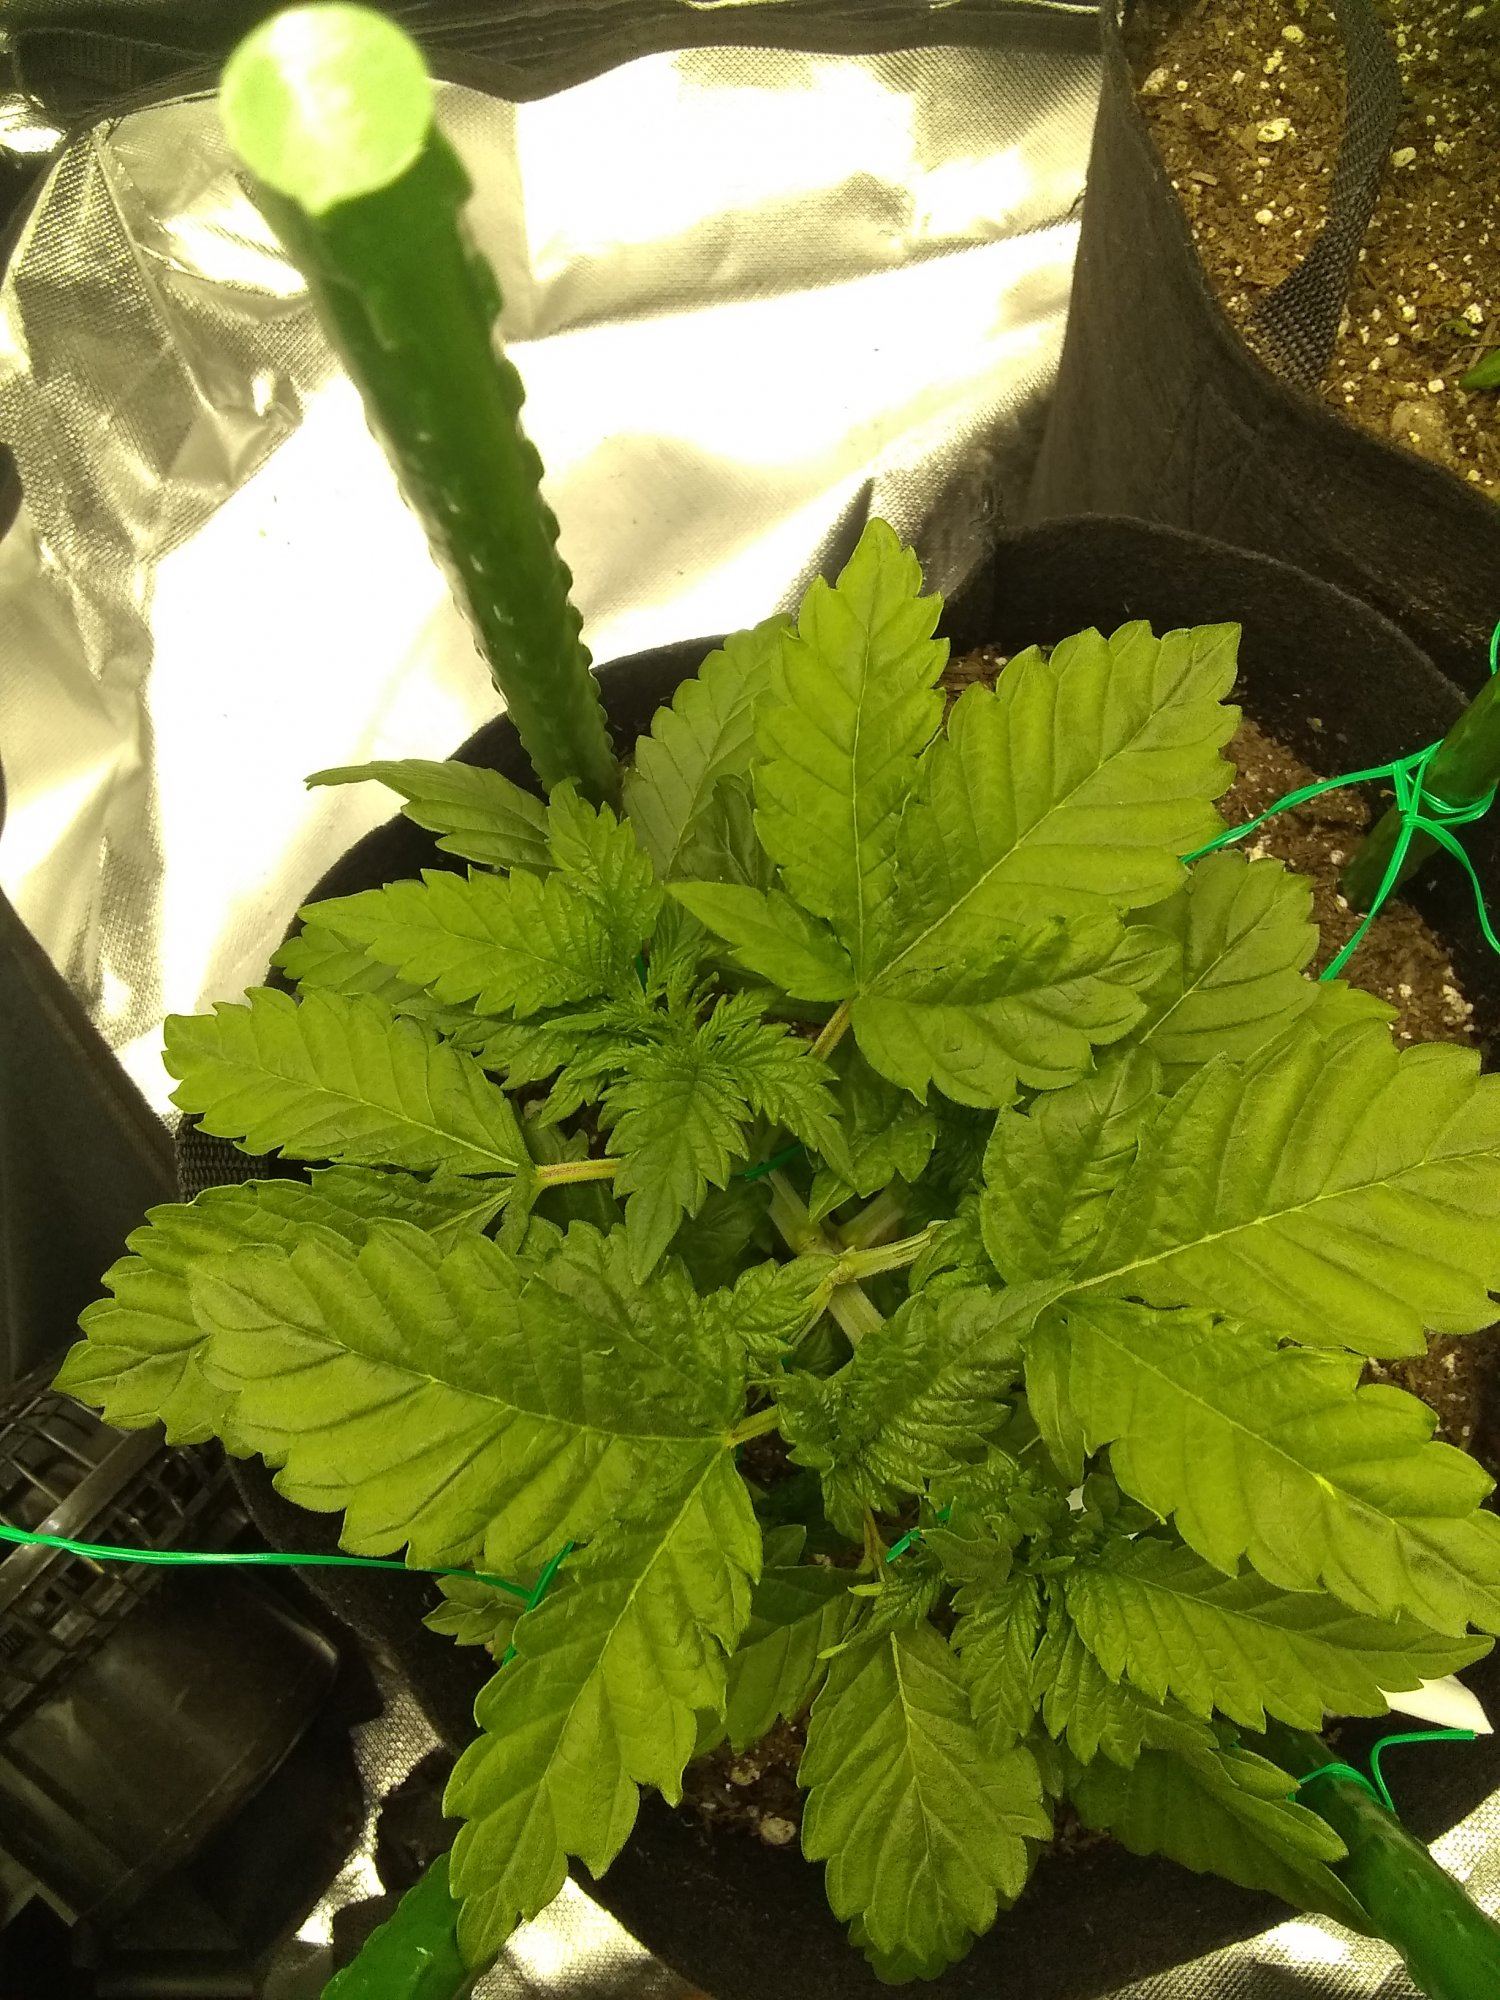 How do my plants look 2